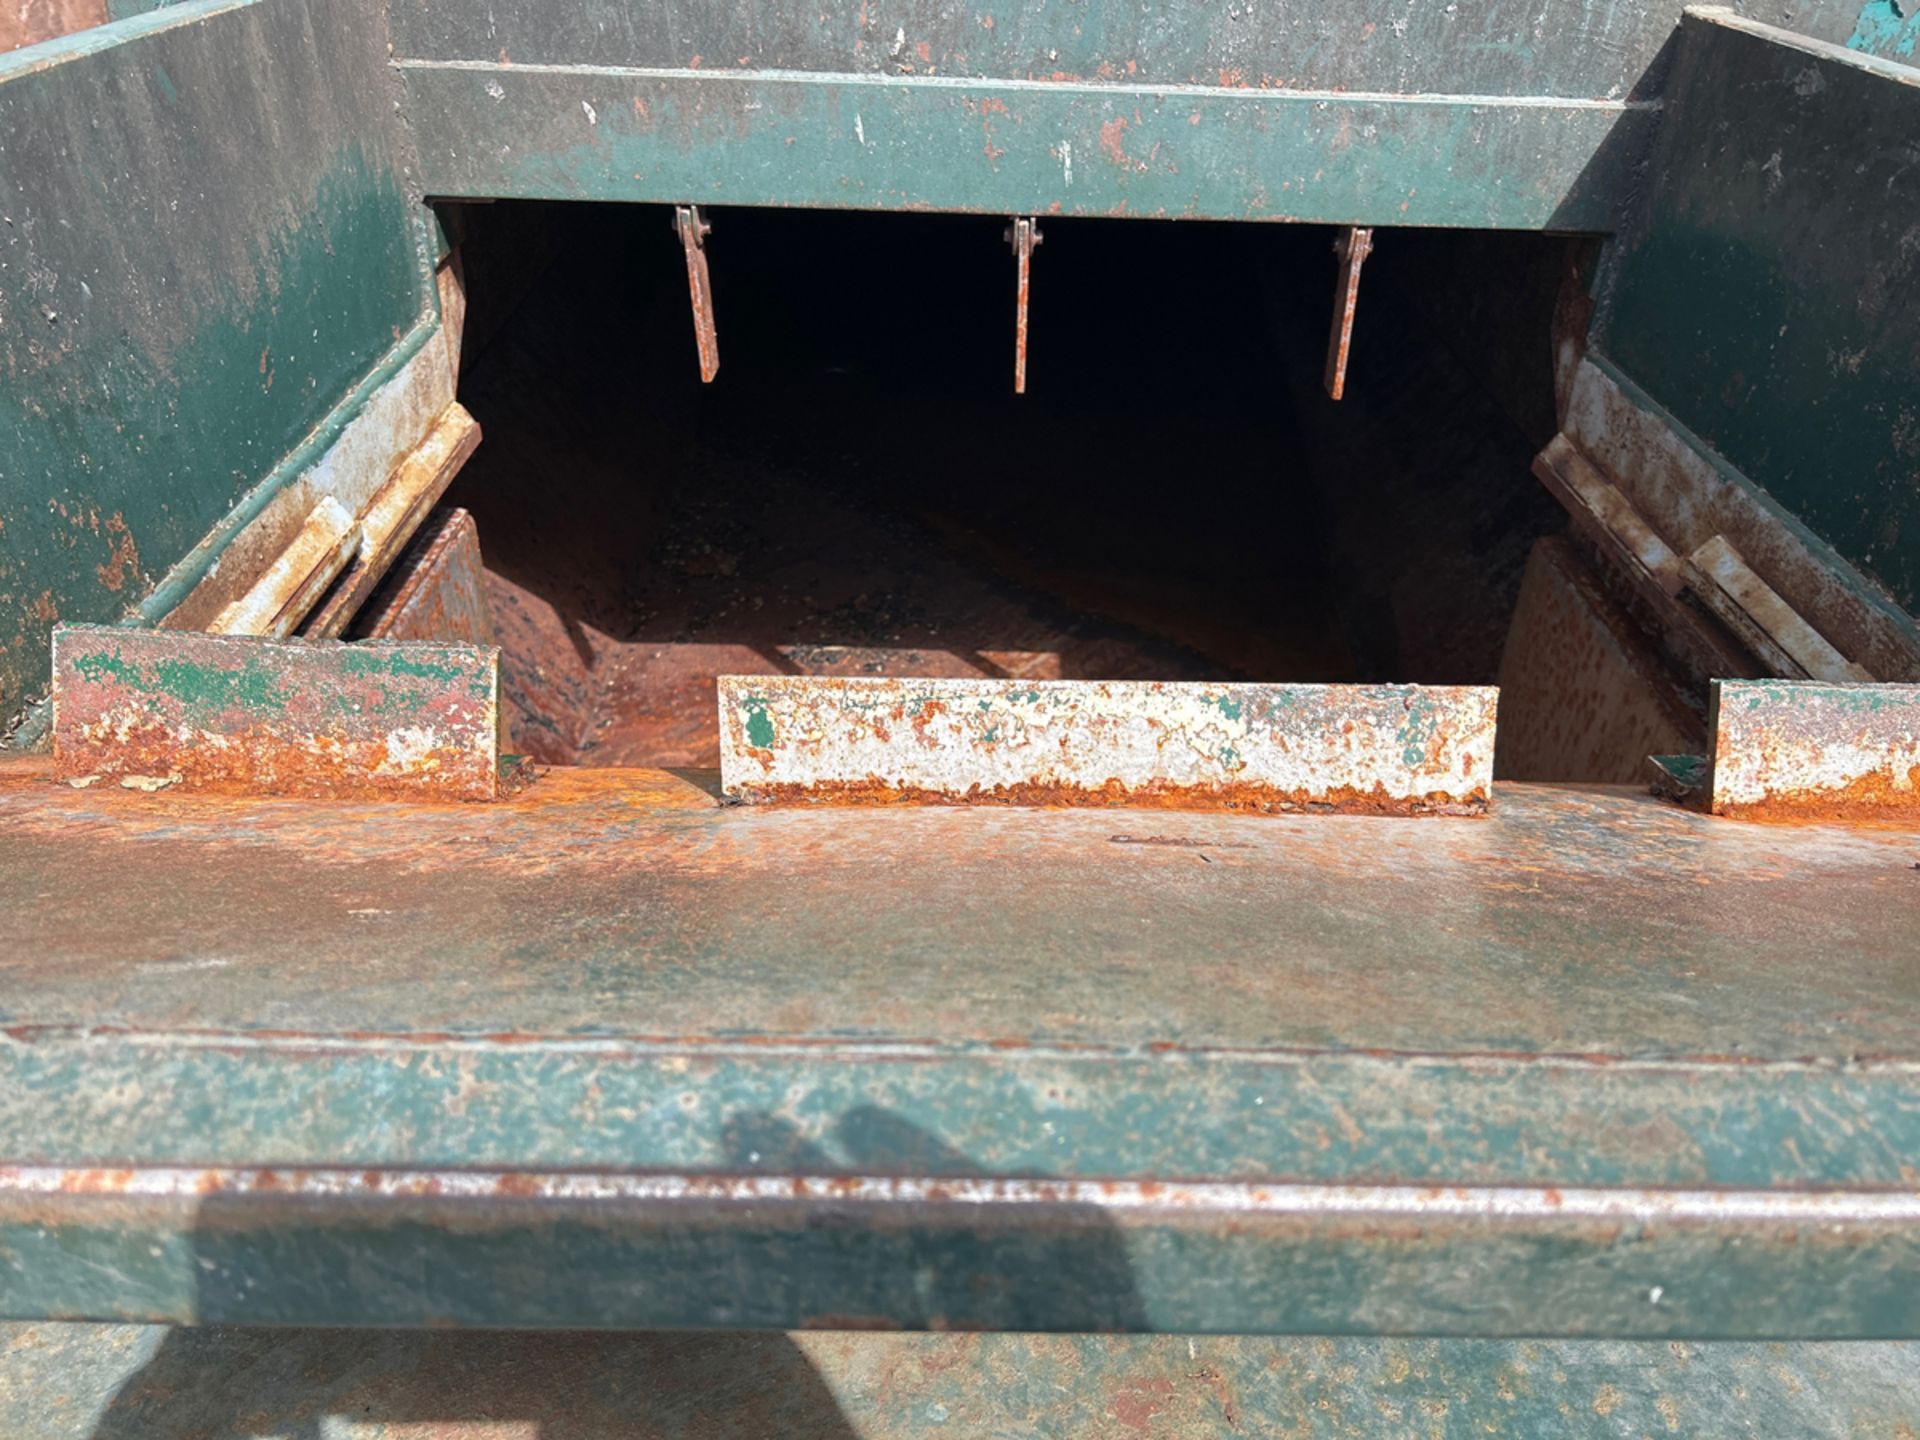 Wastequip Galbreath Commercial Trash Compactor (Monroe, NJ location) - Image 9 of 10